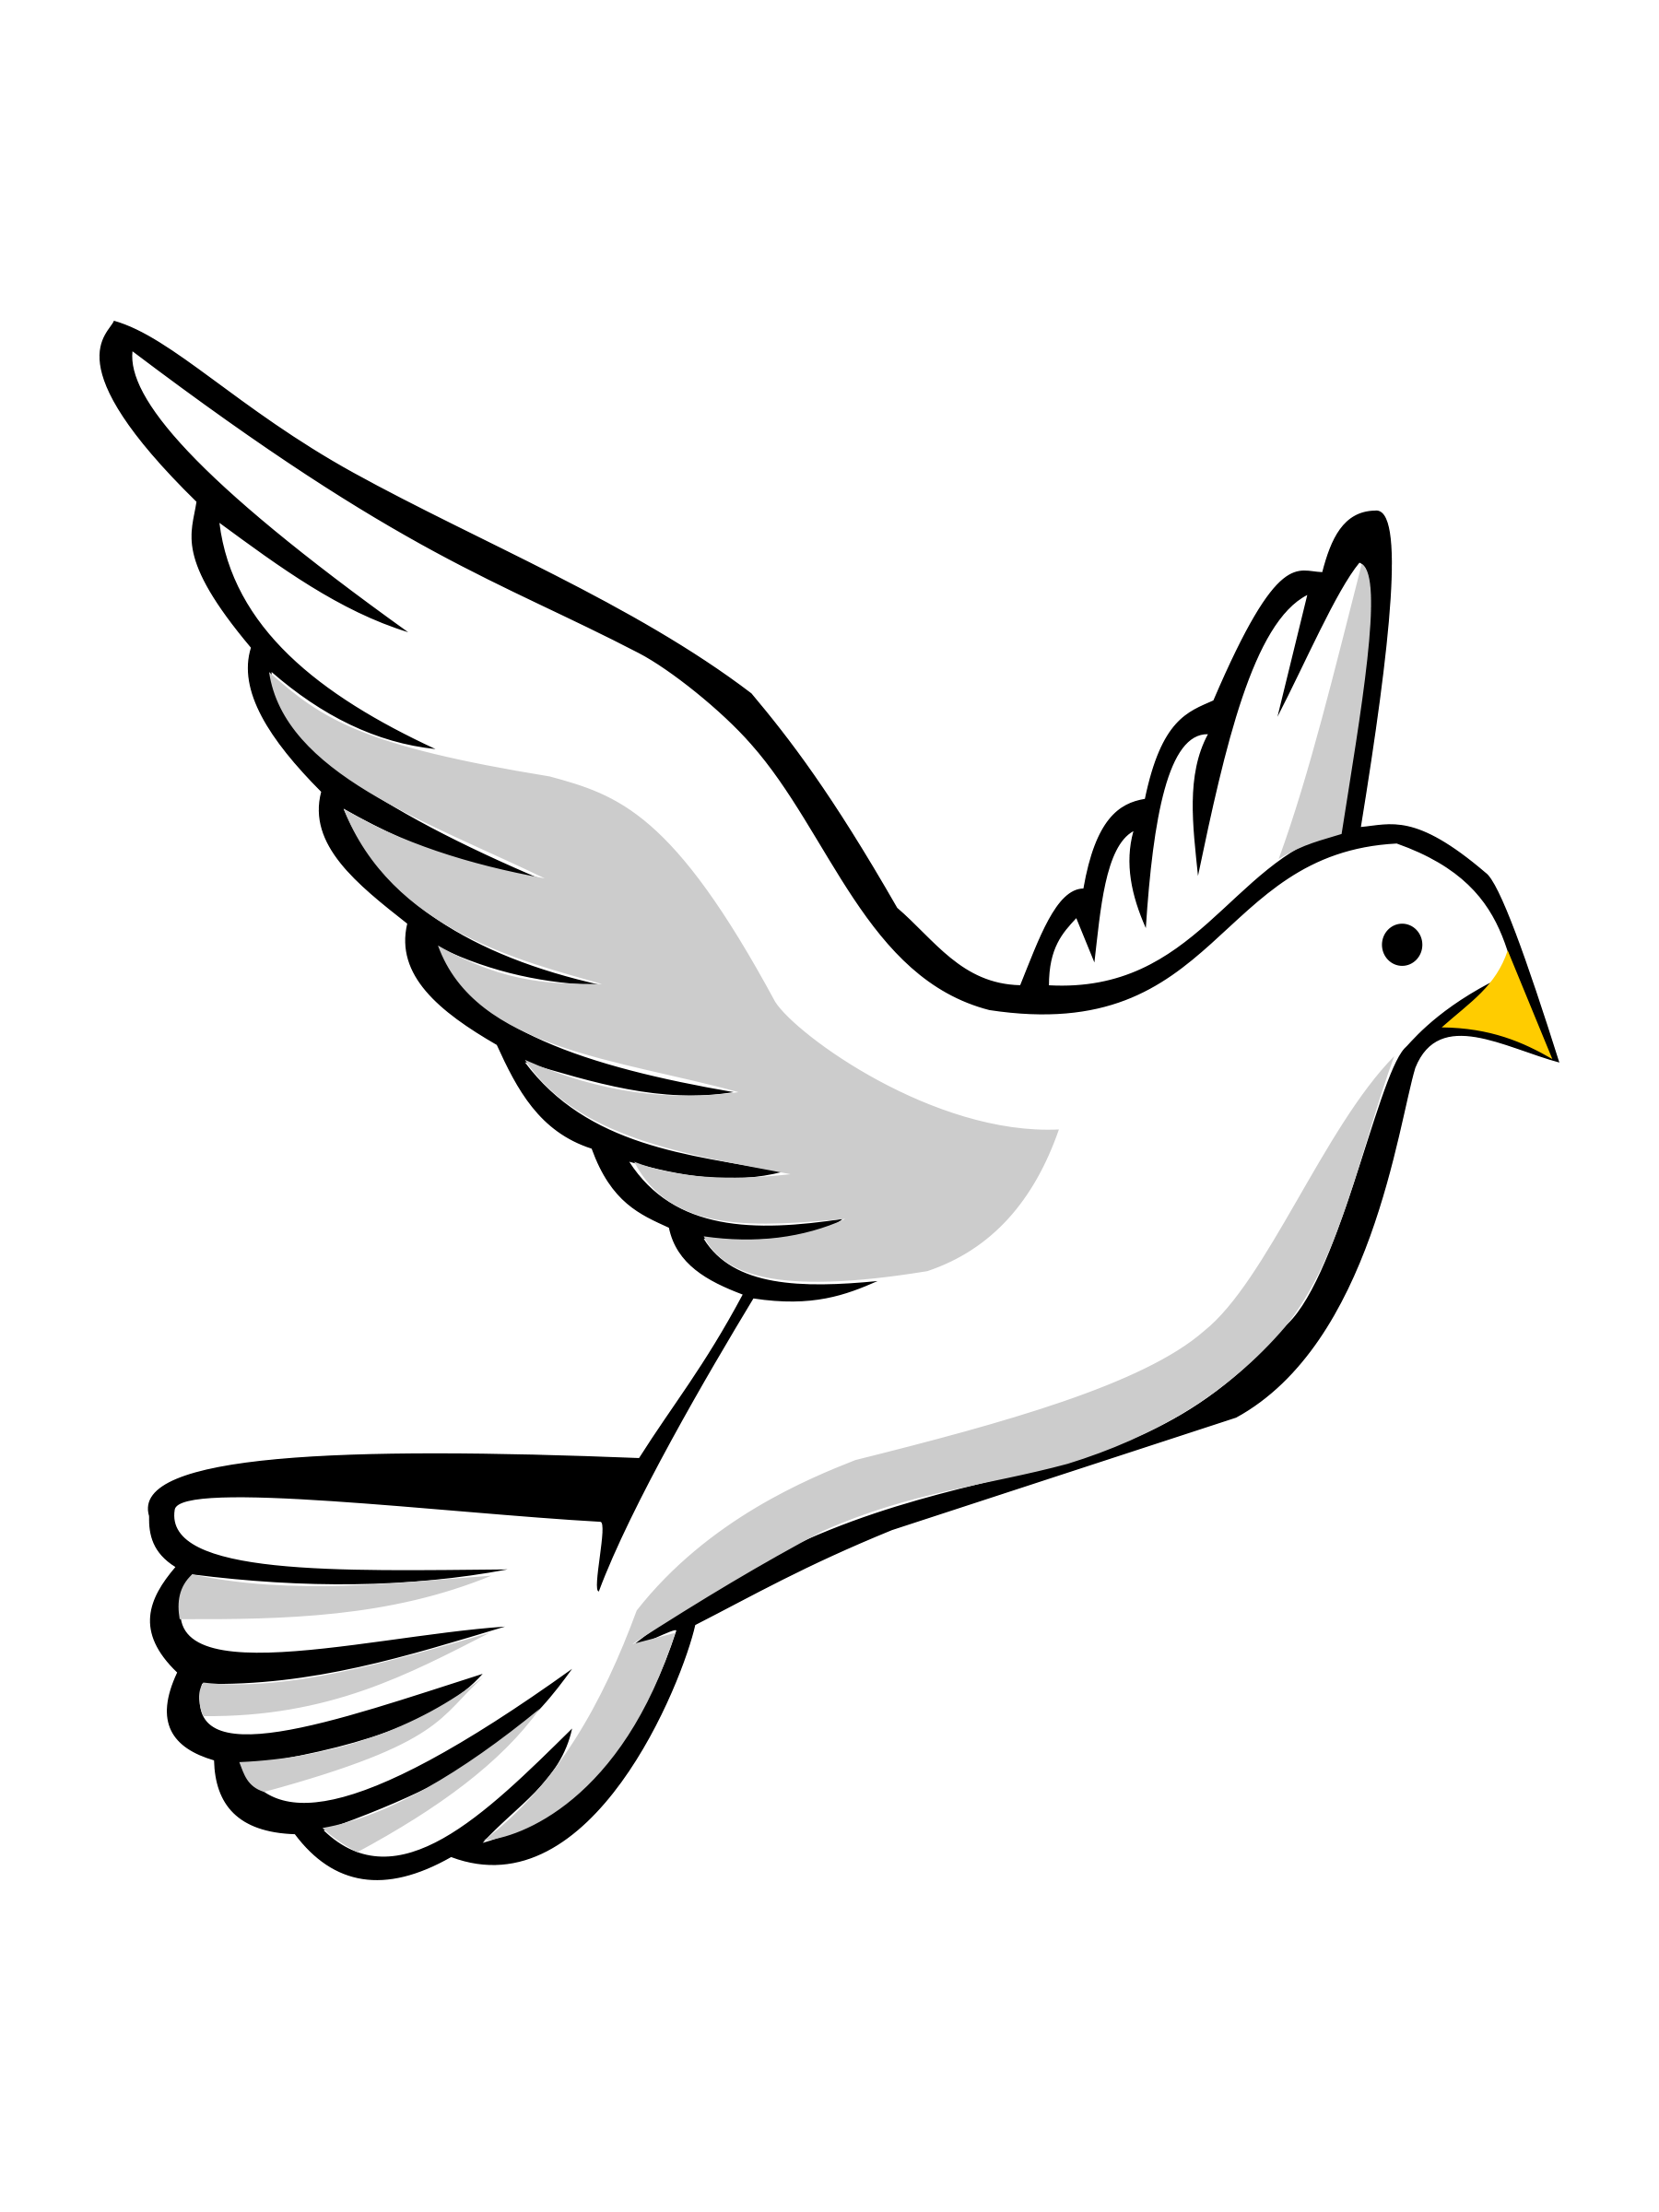 Holy Spirit Dove Black And White Clipart